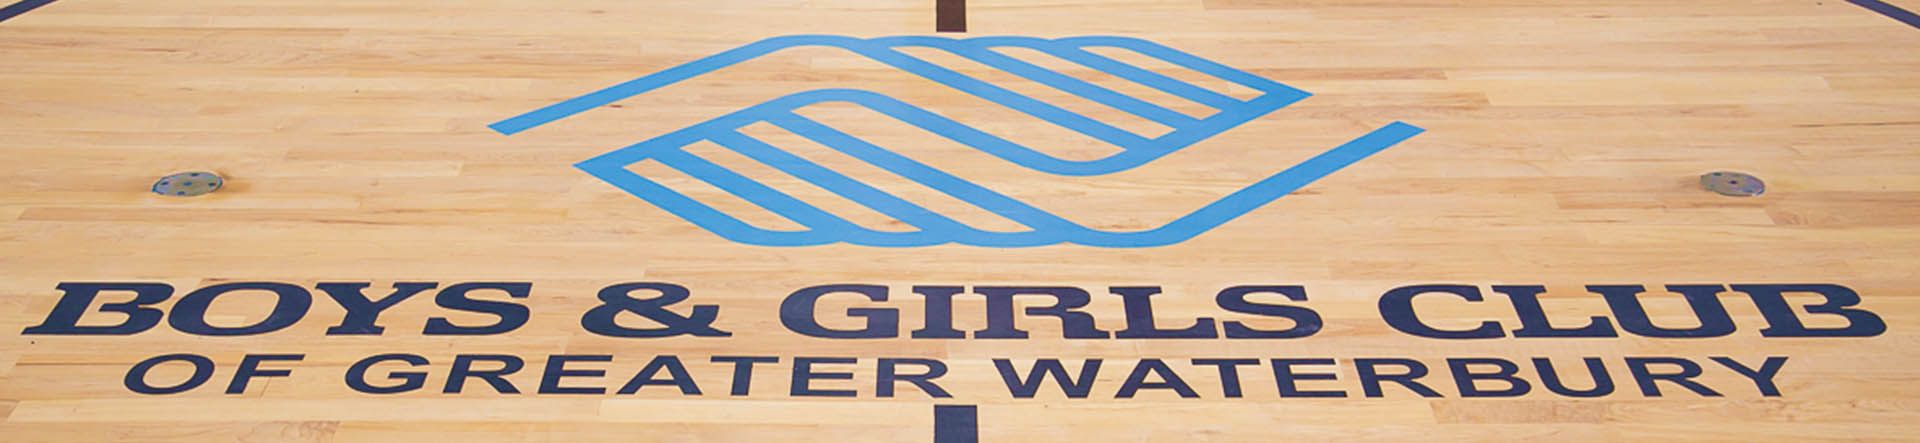 Image of BGCGW logo on basketball court